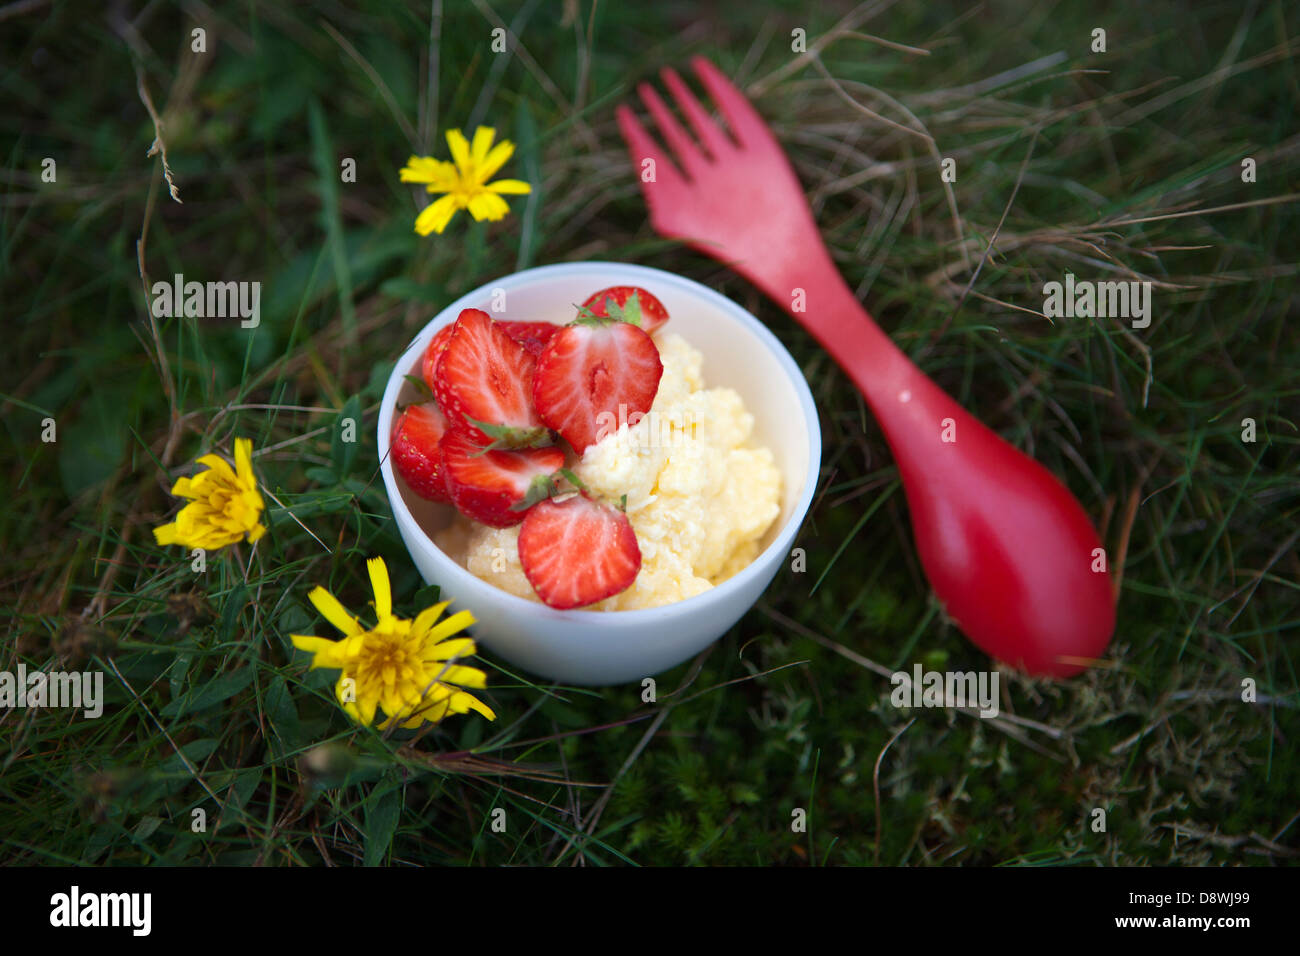 Dessert in bowl on grass Stock Photo